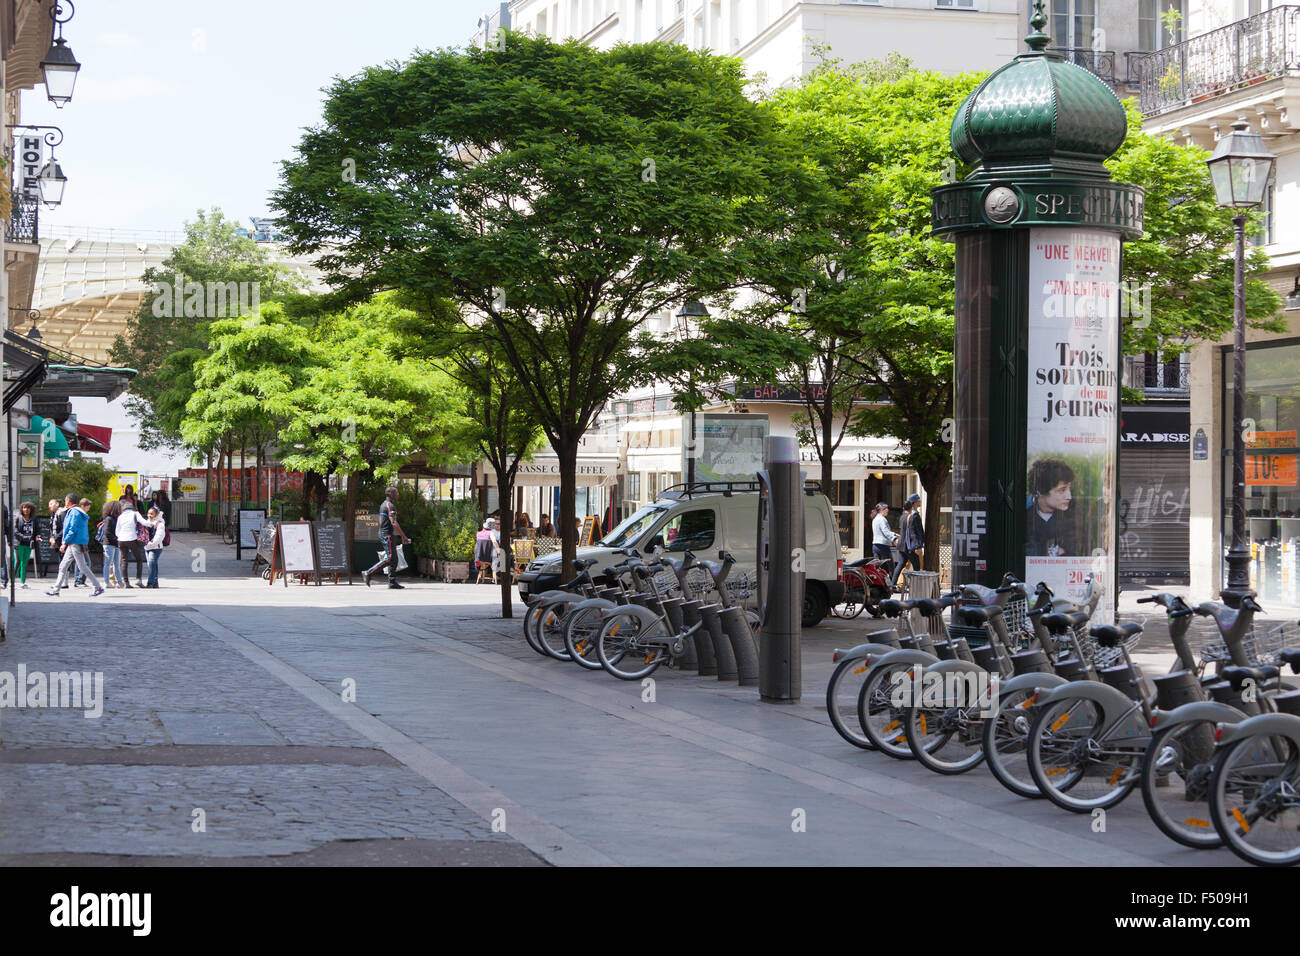 Velib bicycle rental scheme in Paris, France. Stock Photo